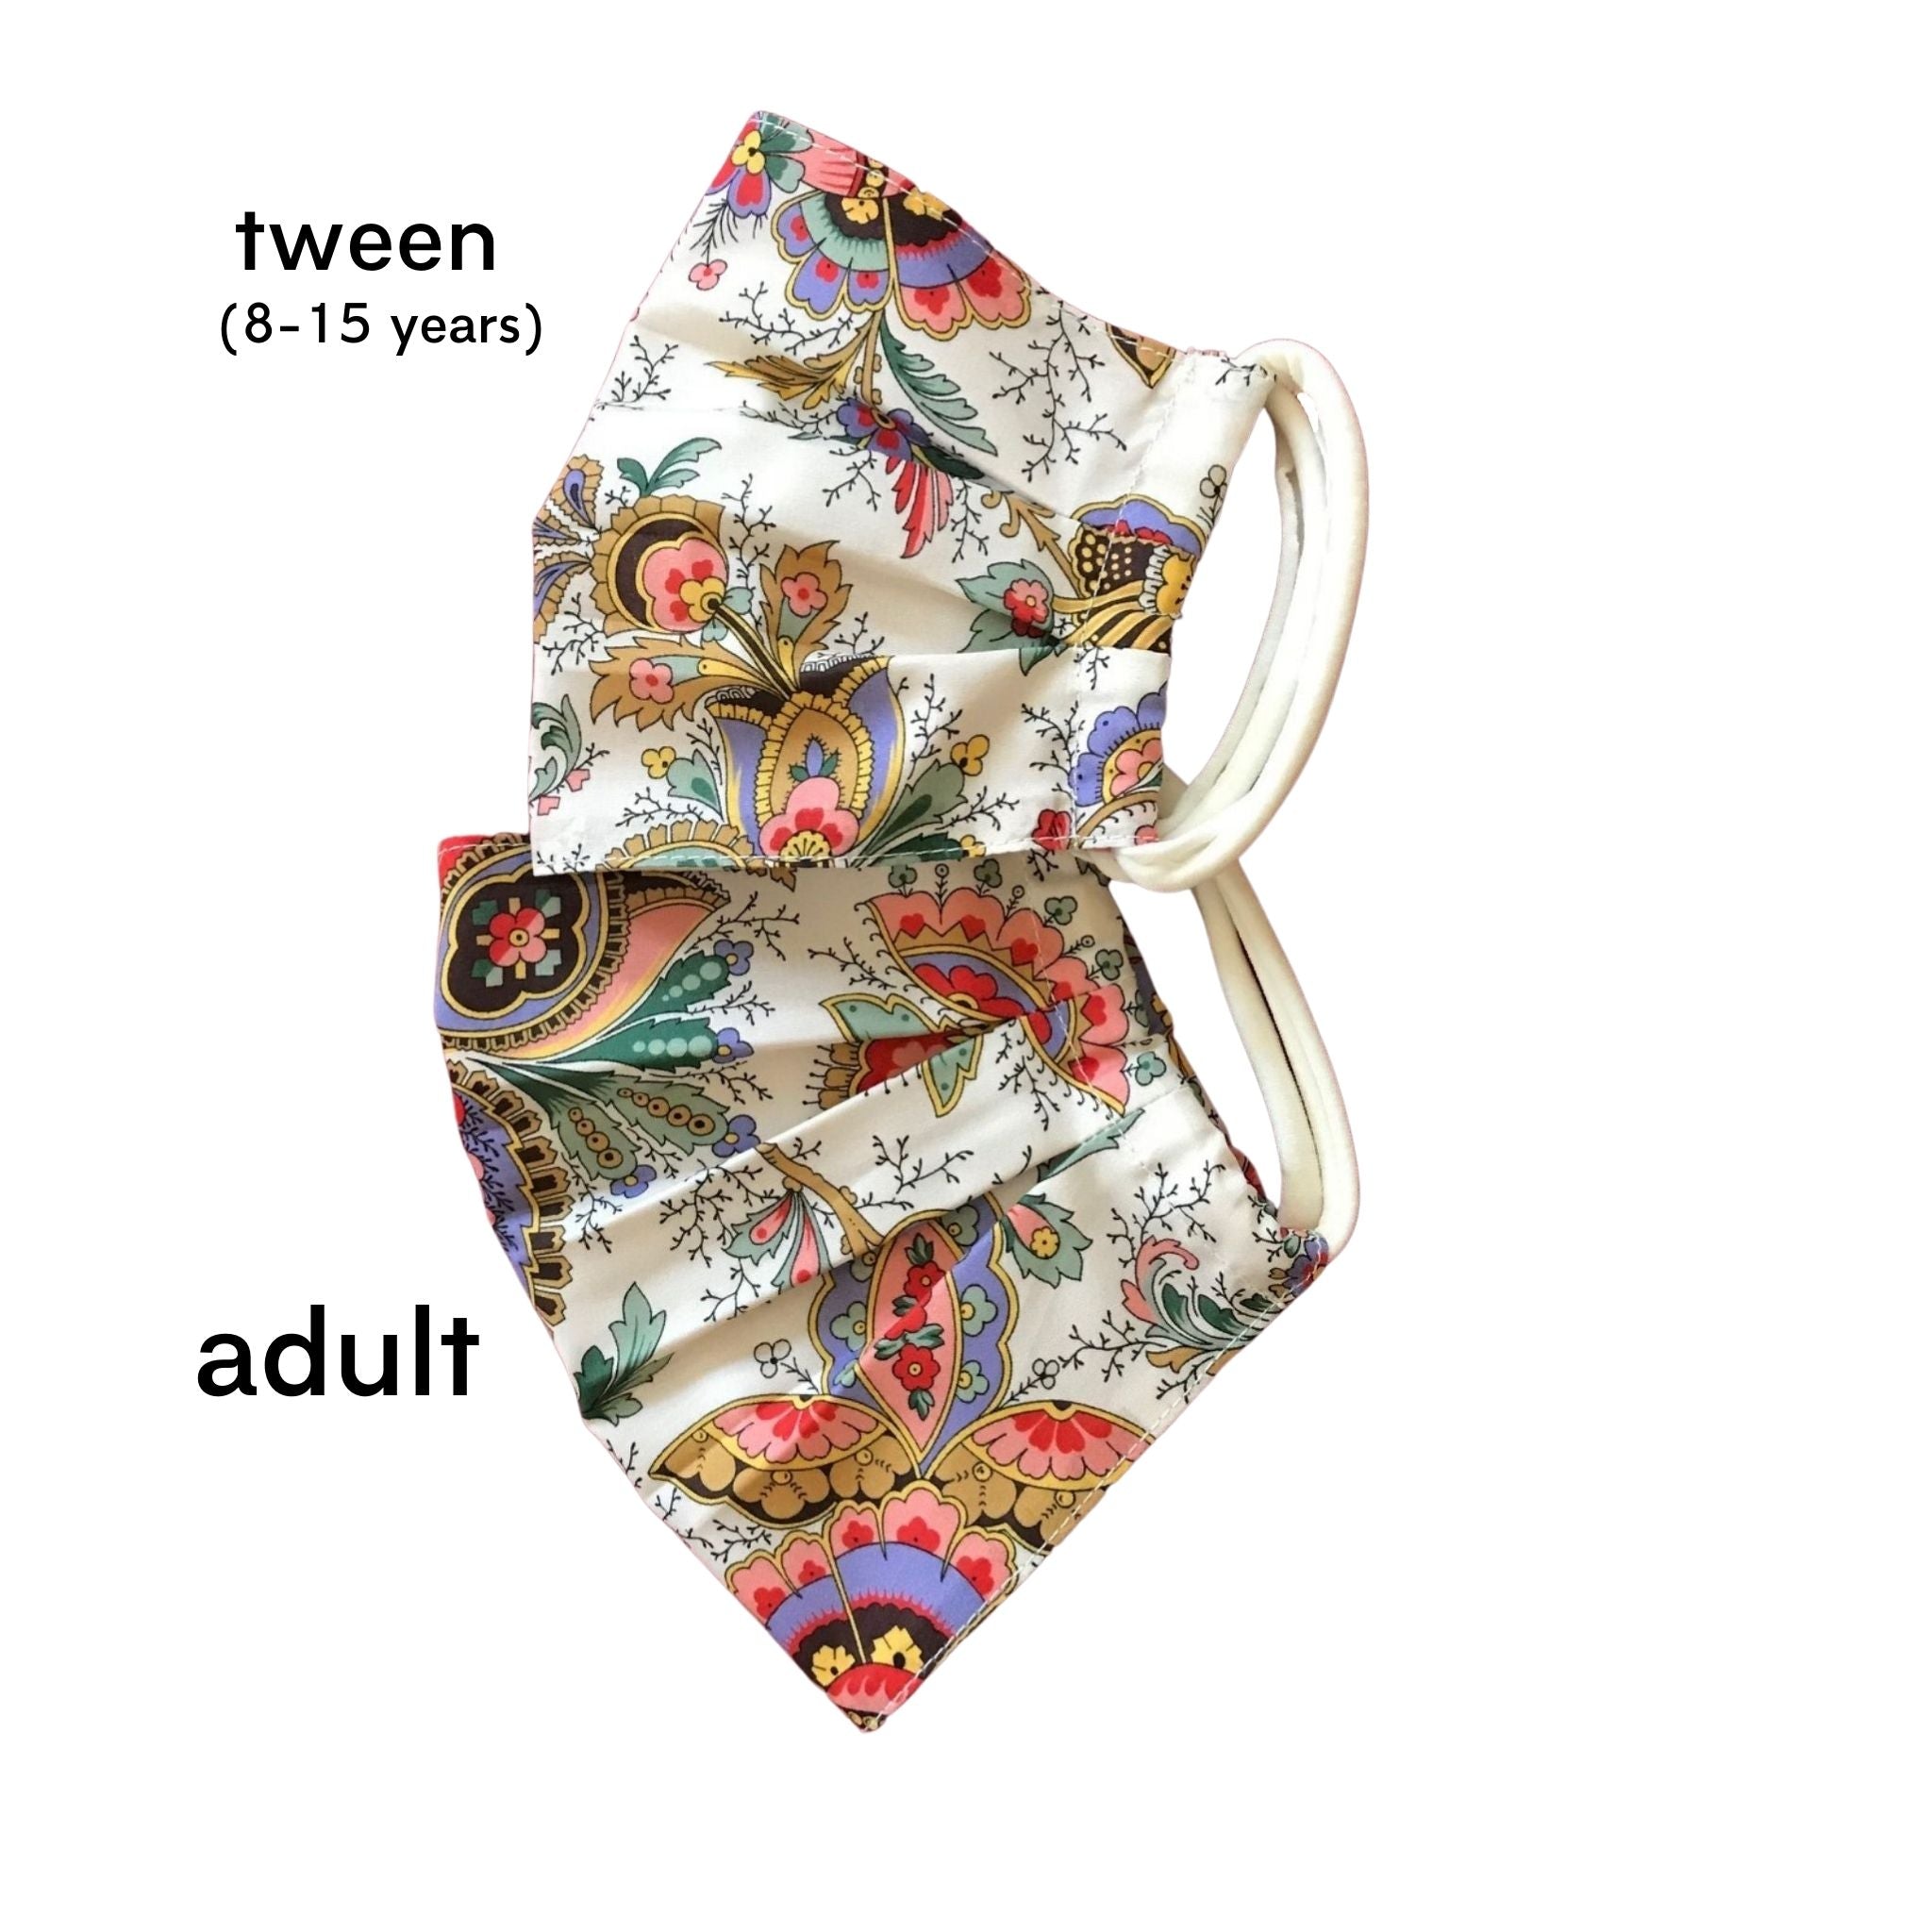 Adult & Tween Cotton Mask in Always Peachy Paisley Liberty London Print